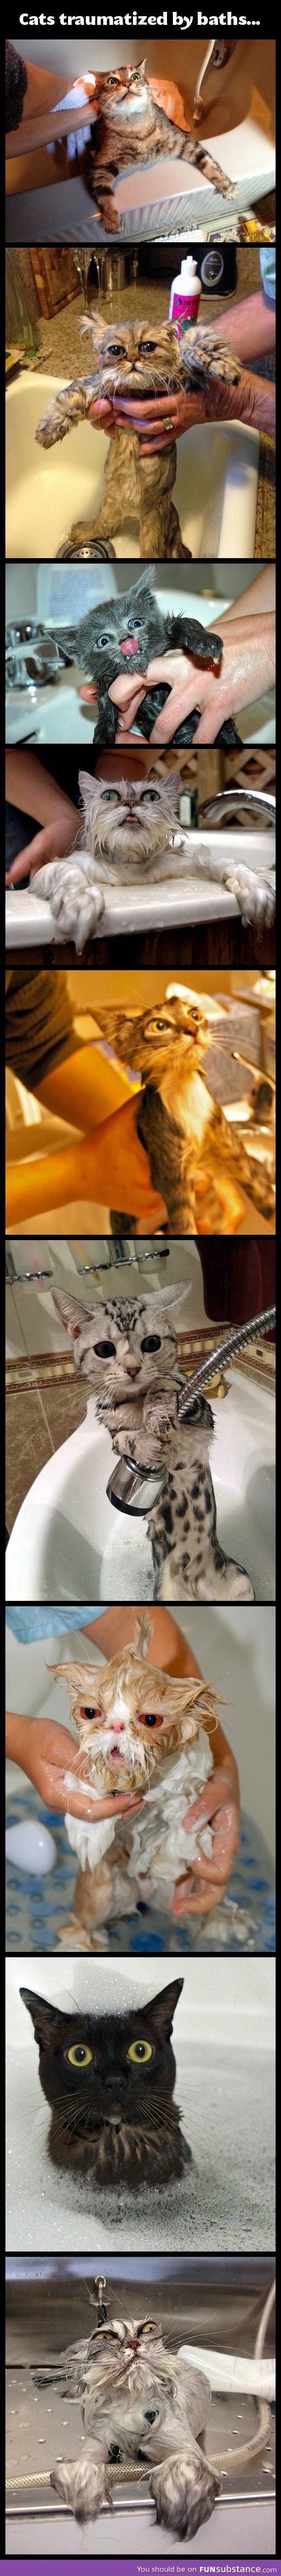 Cats traumatized by baths